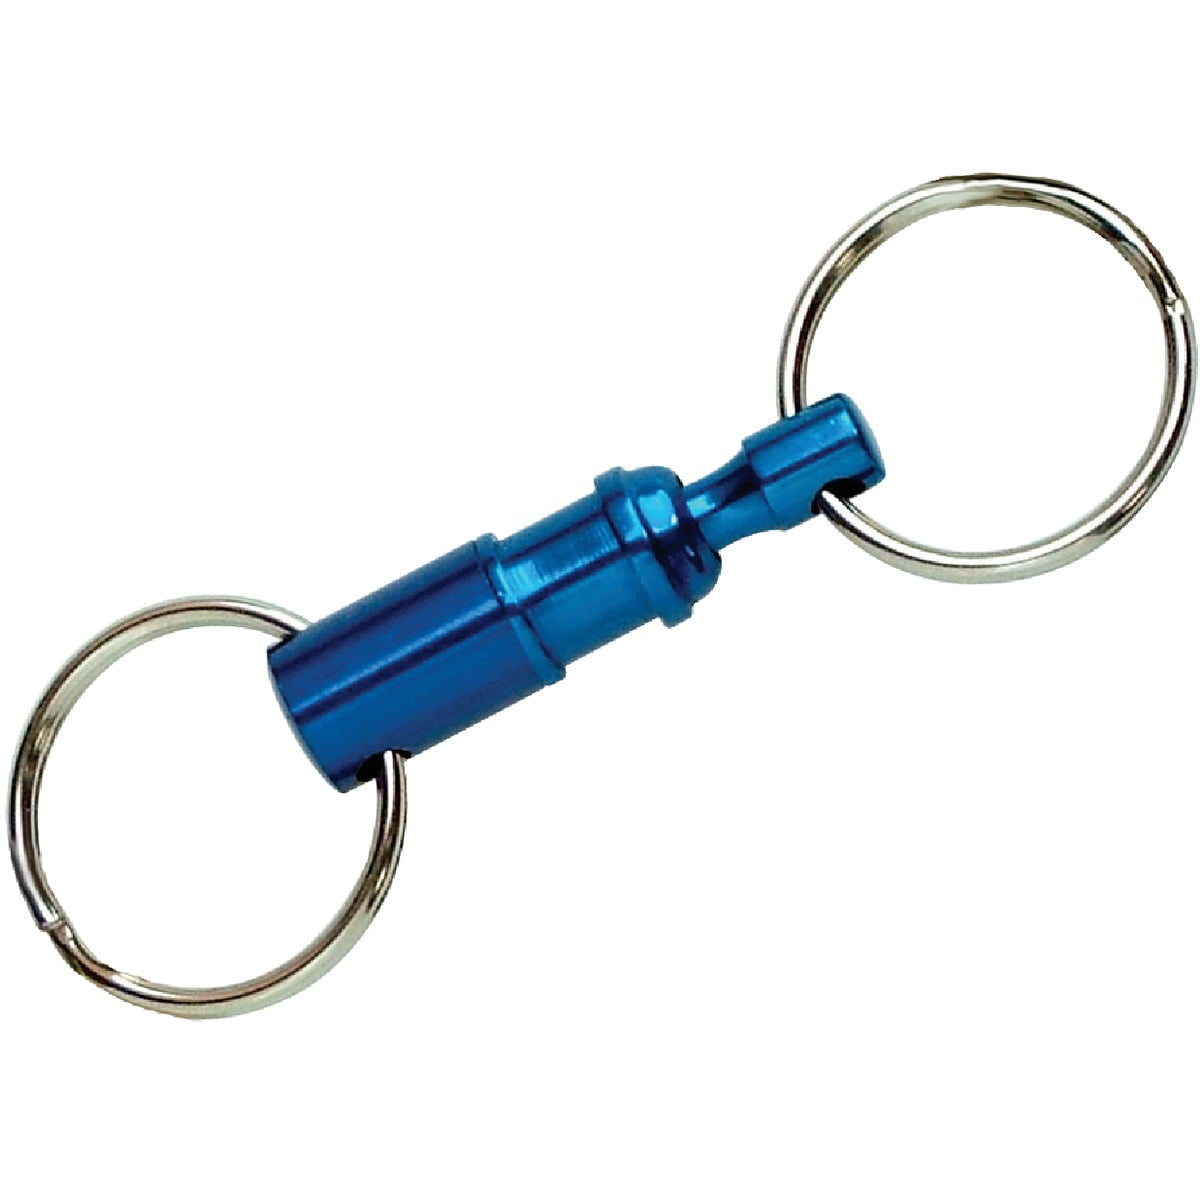 Interstate Pneumatics Y90KR Quick Coupler Key Chain for sale online